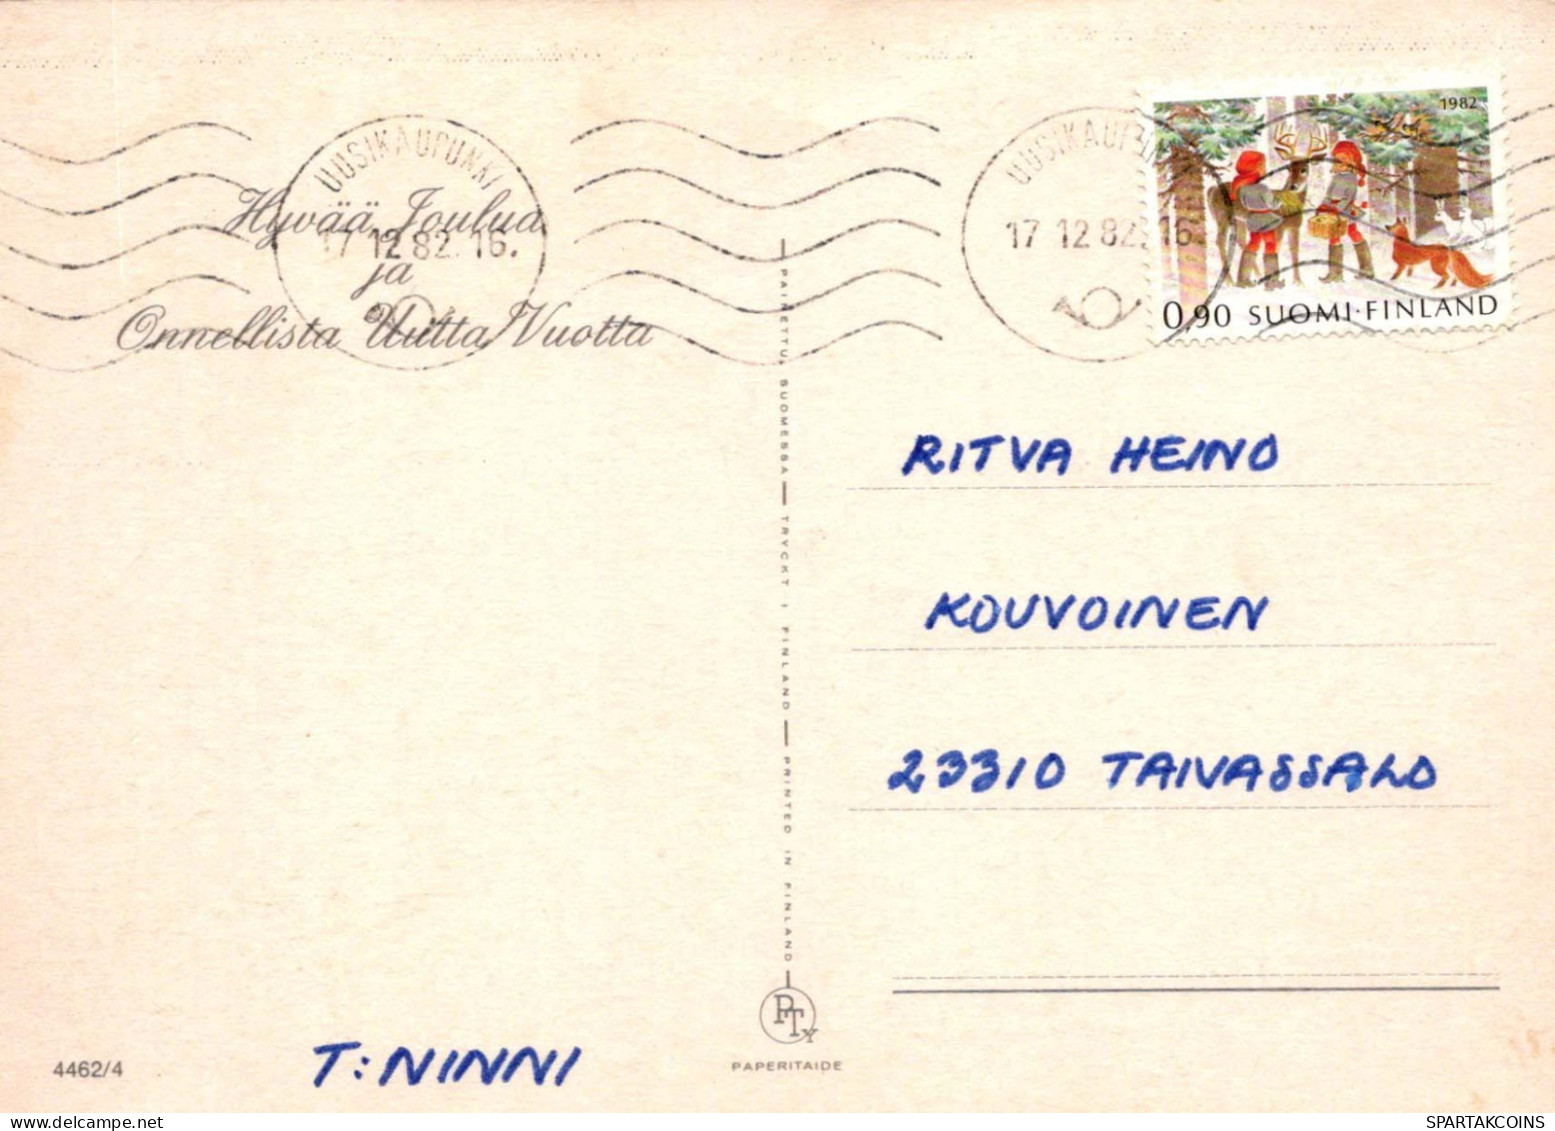 NIÑOS NIÑOS Escena S Paisajes Vintage Tarjeta Postal CPSM #PBU415.ES - Szenen & Landschaften